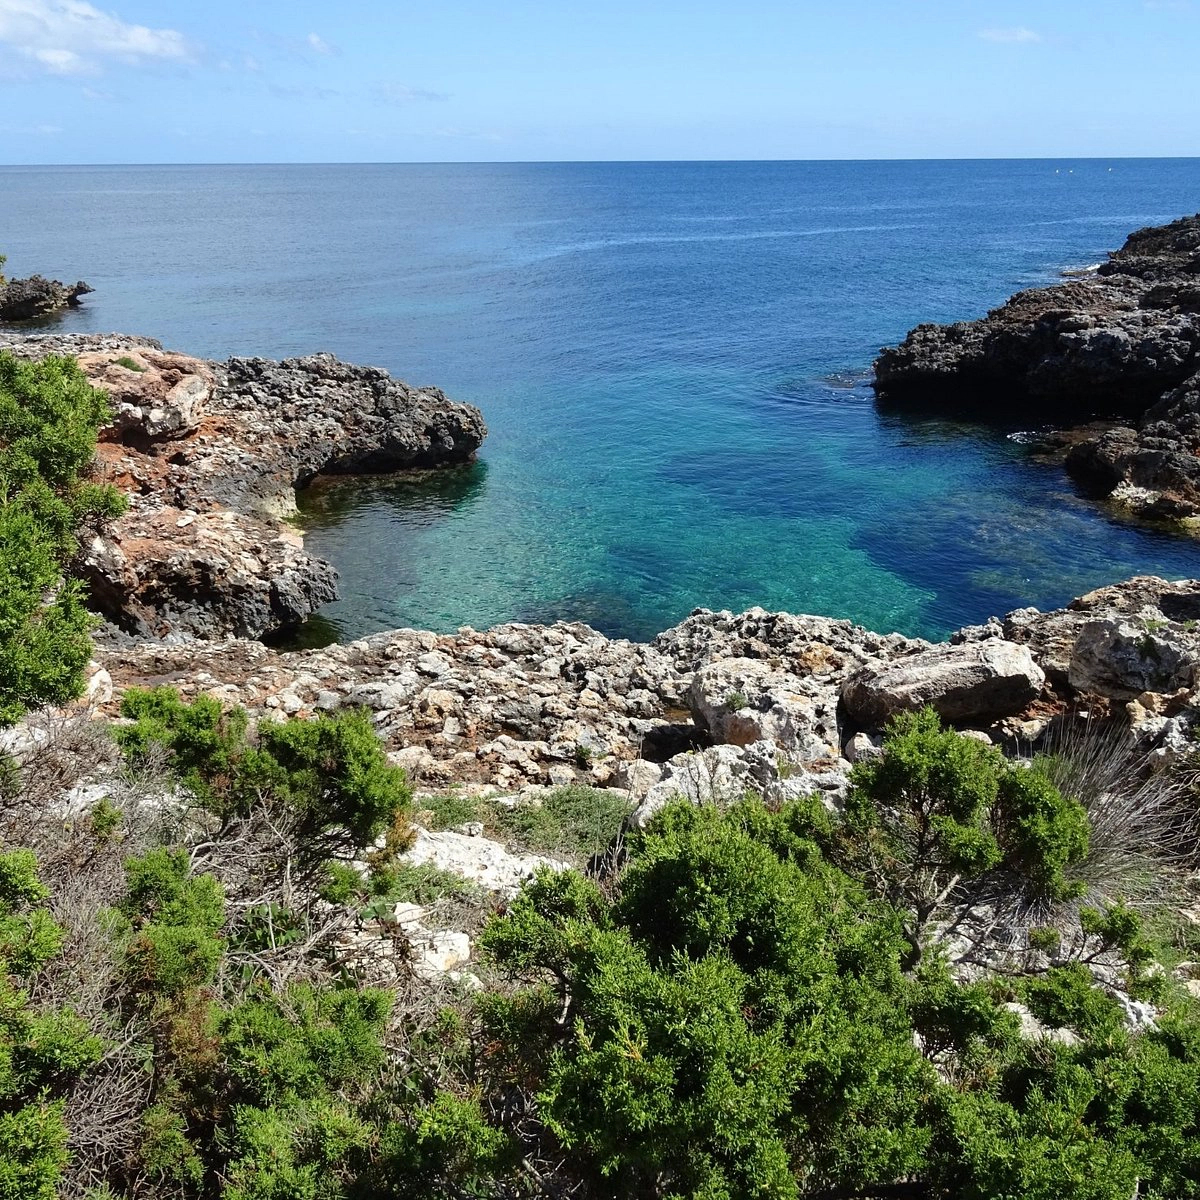  Cala en Bosc  strand - Menorca